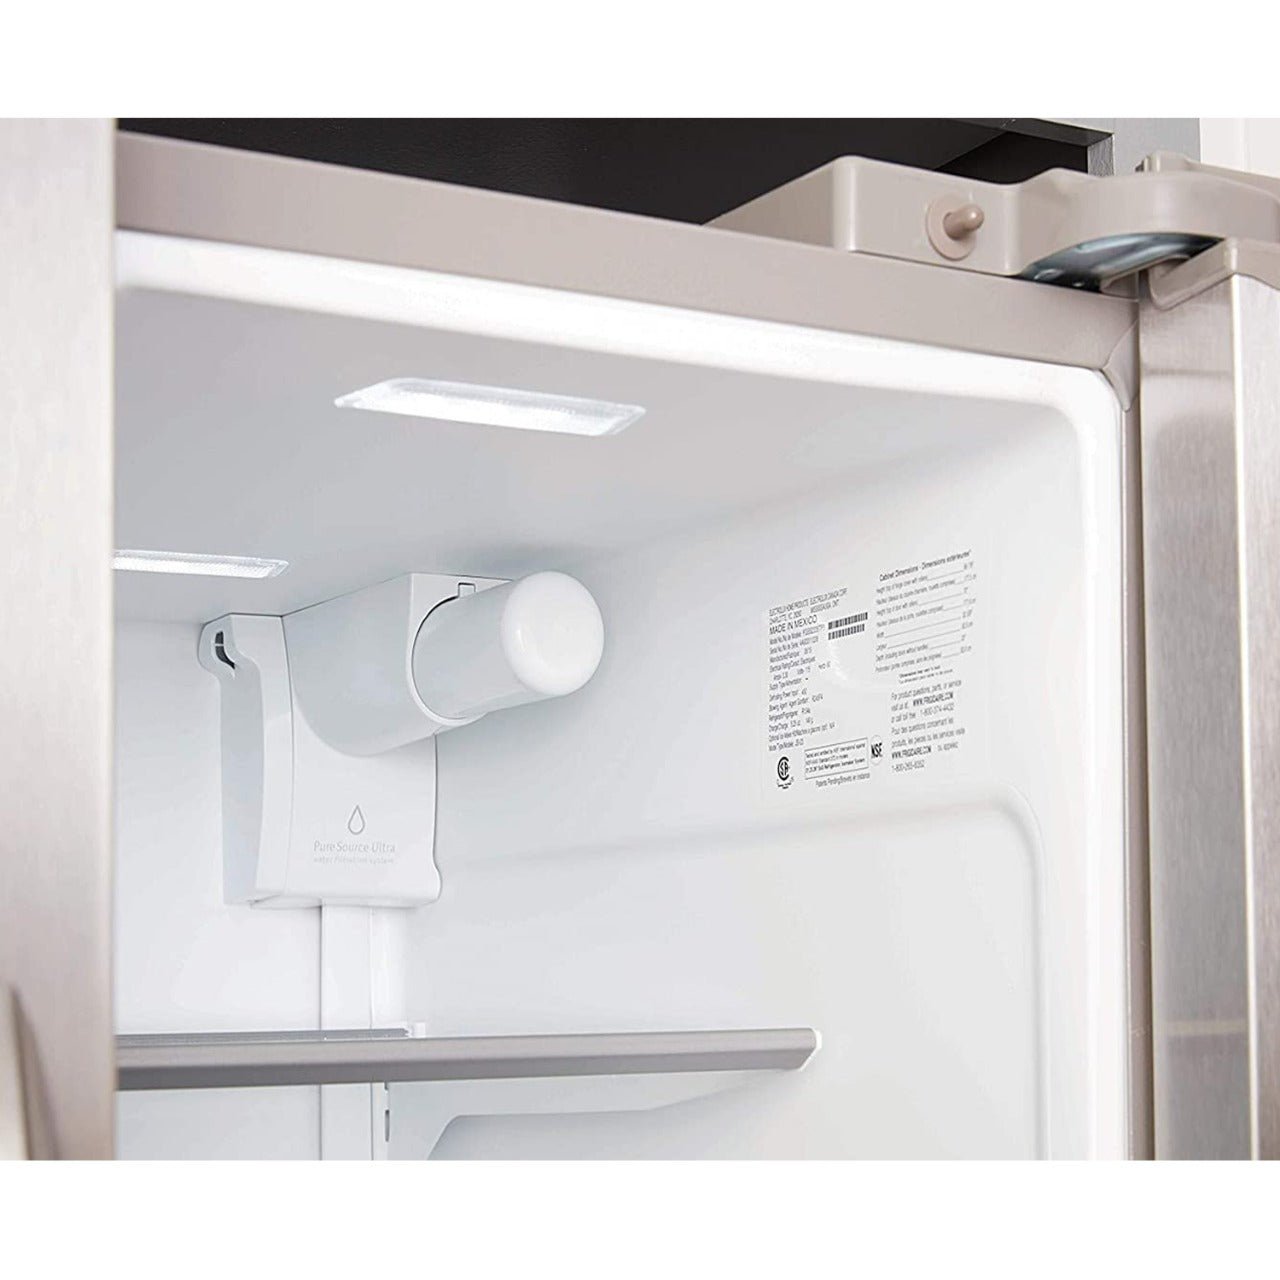 Frigidaire PAULTRA Refrigerator PureAir Ultra Air Filter Cartridge